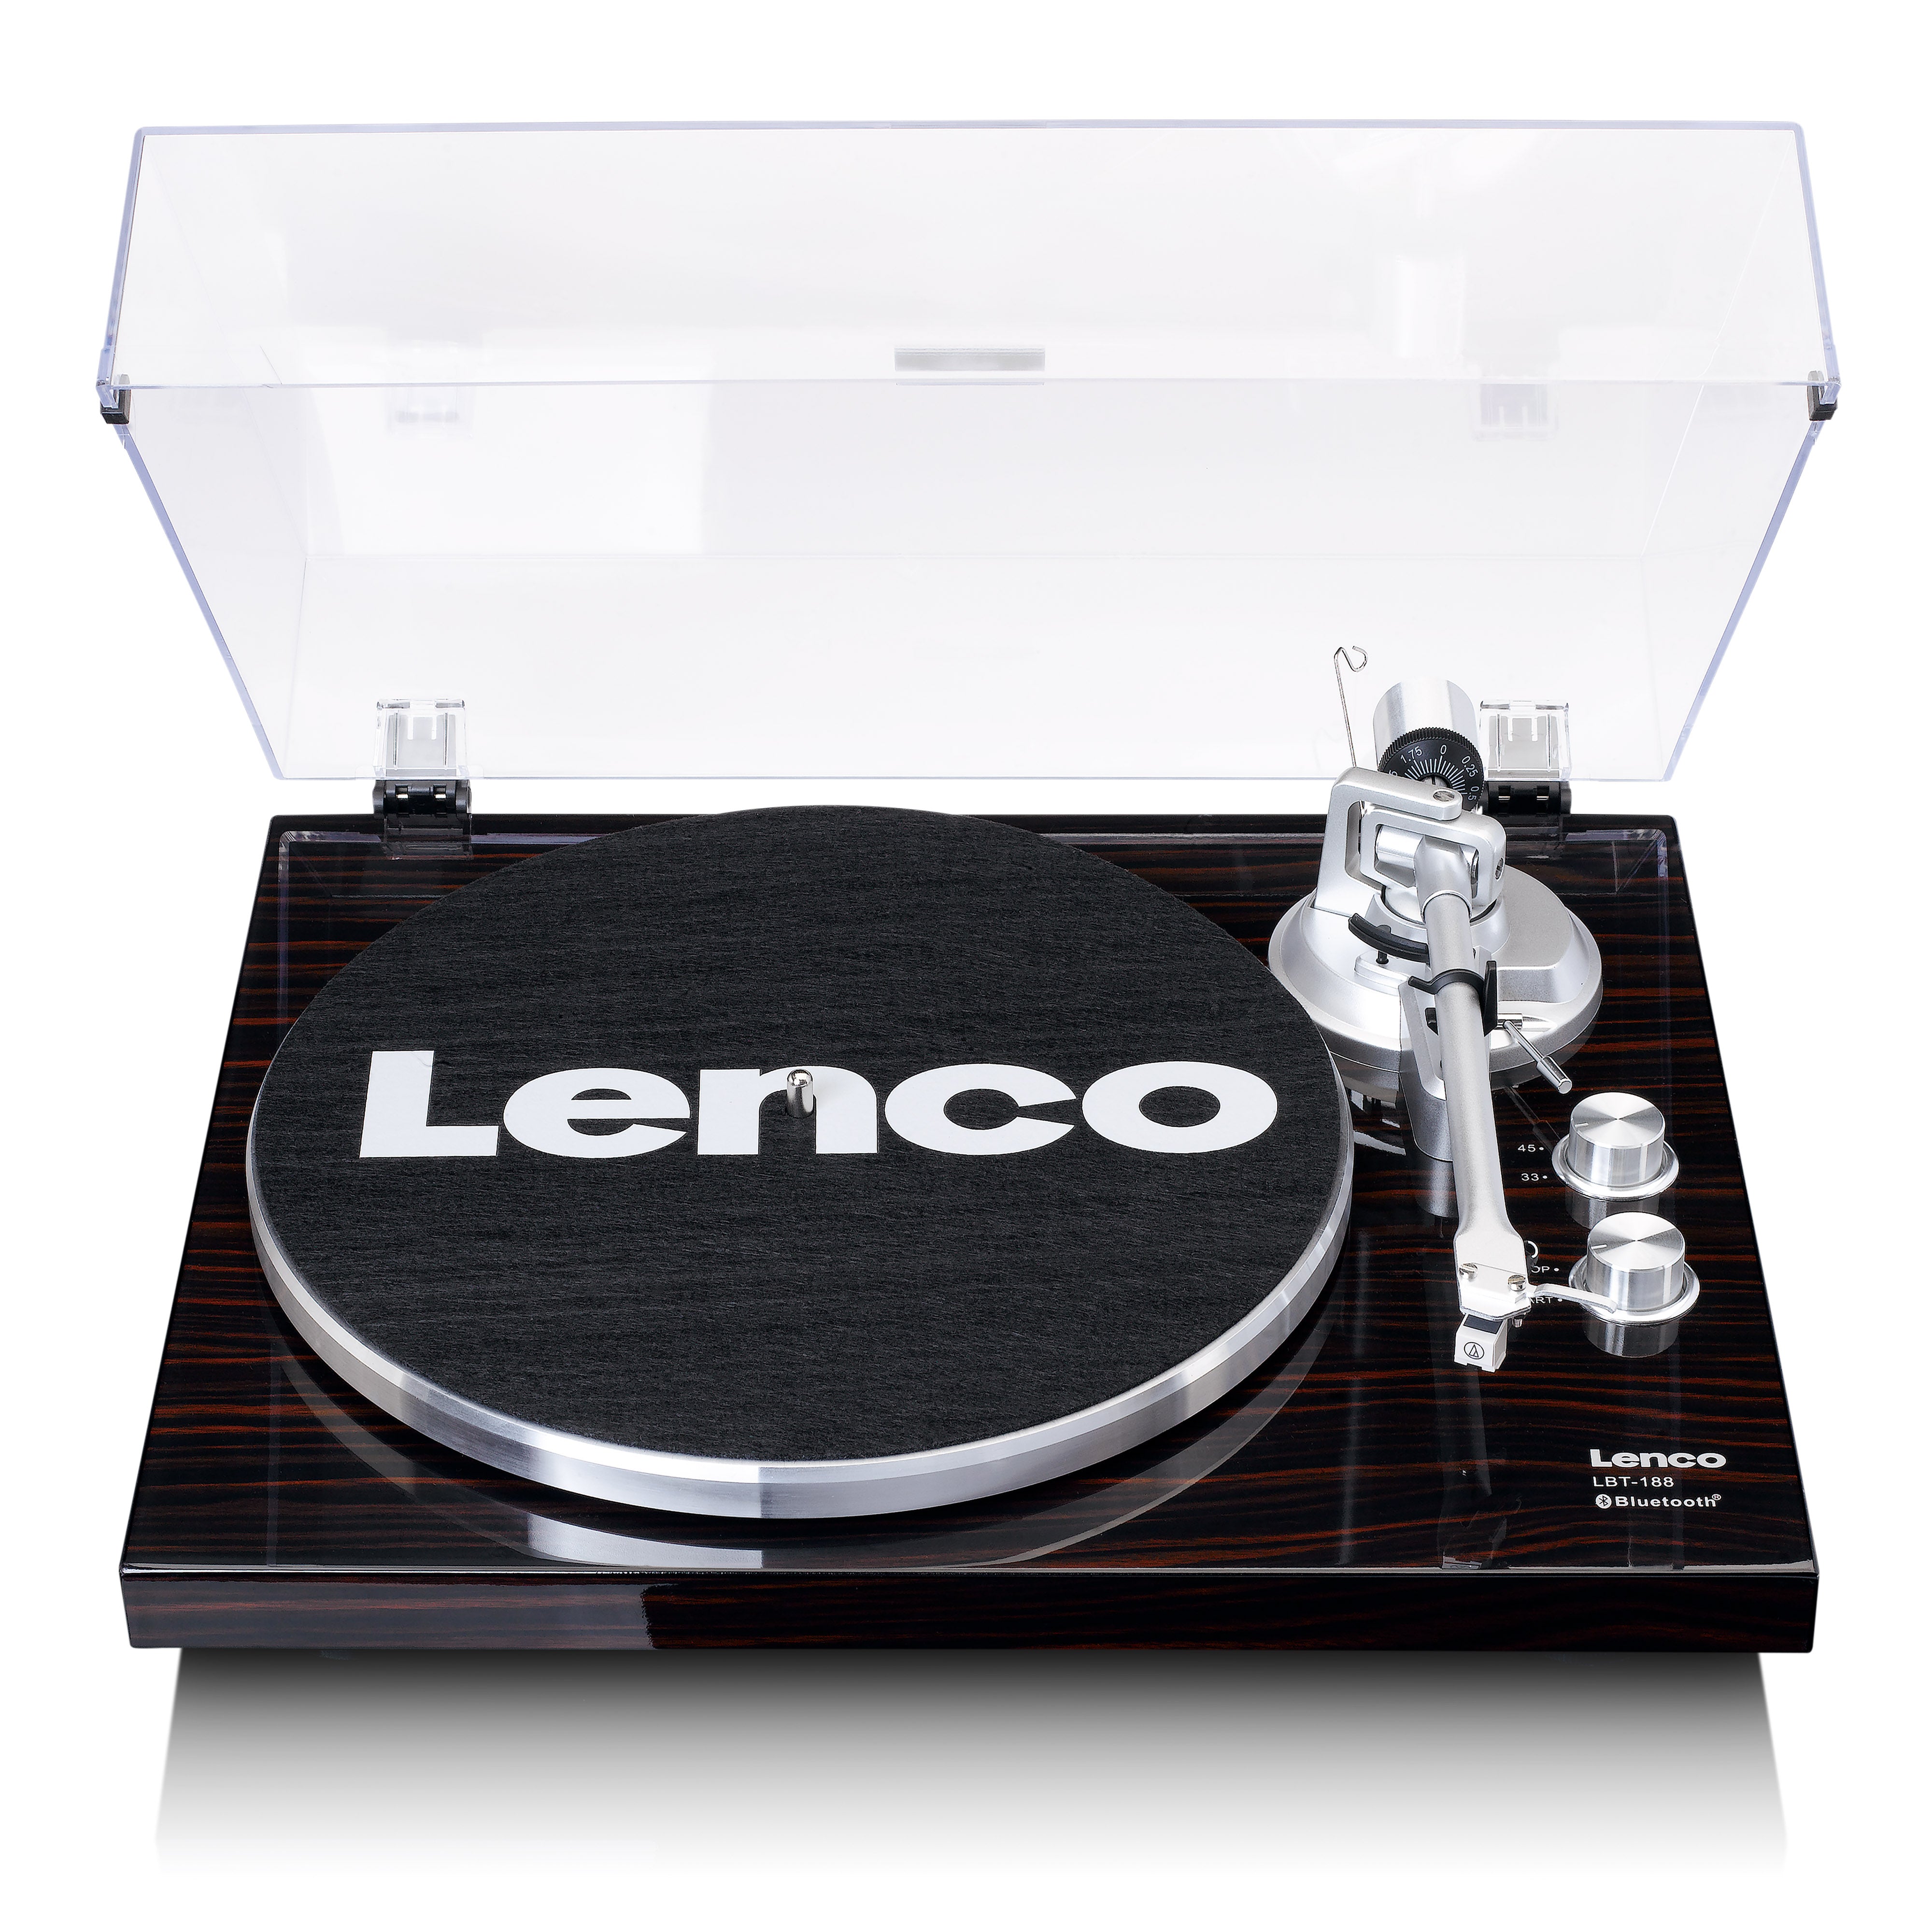 Lenco LBT-188WA Offizieller kaufen? offiziellen Lenco.de | – Lenco Webshop Webshop - Jetzt im